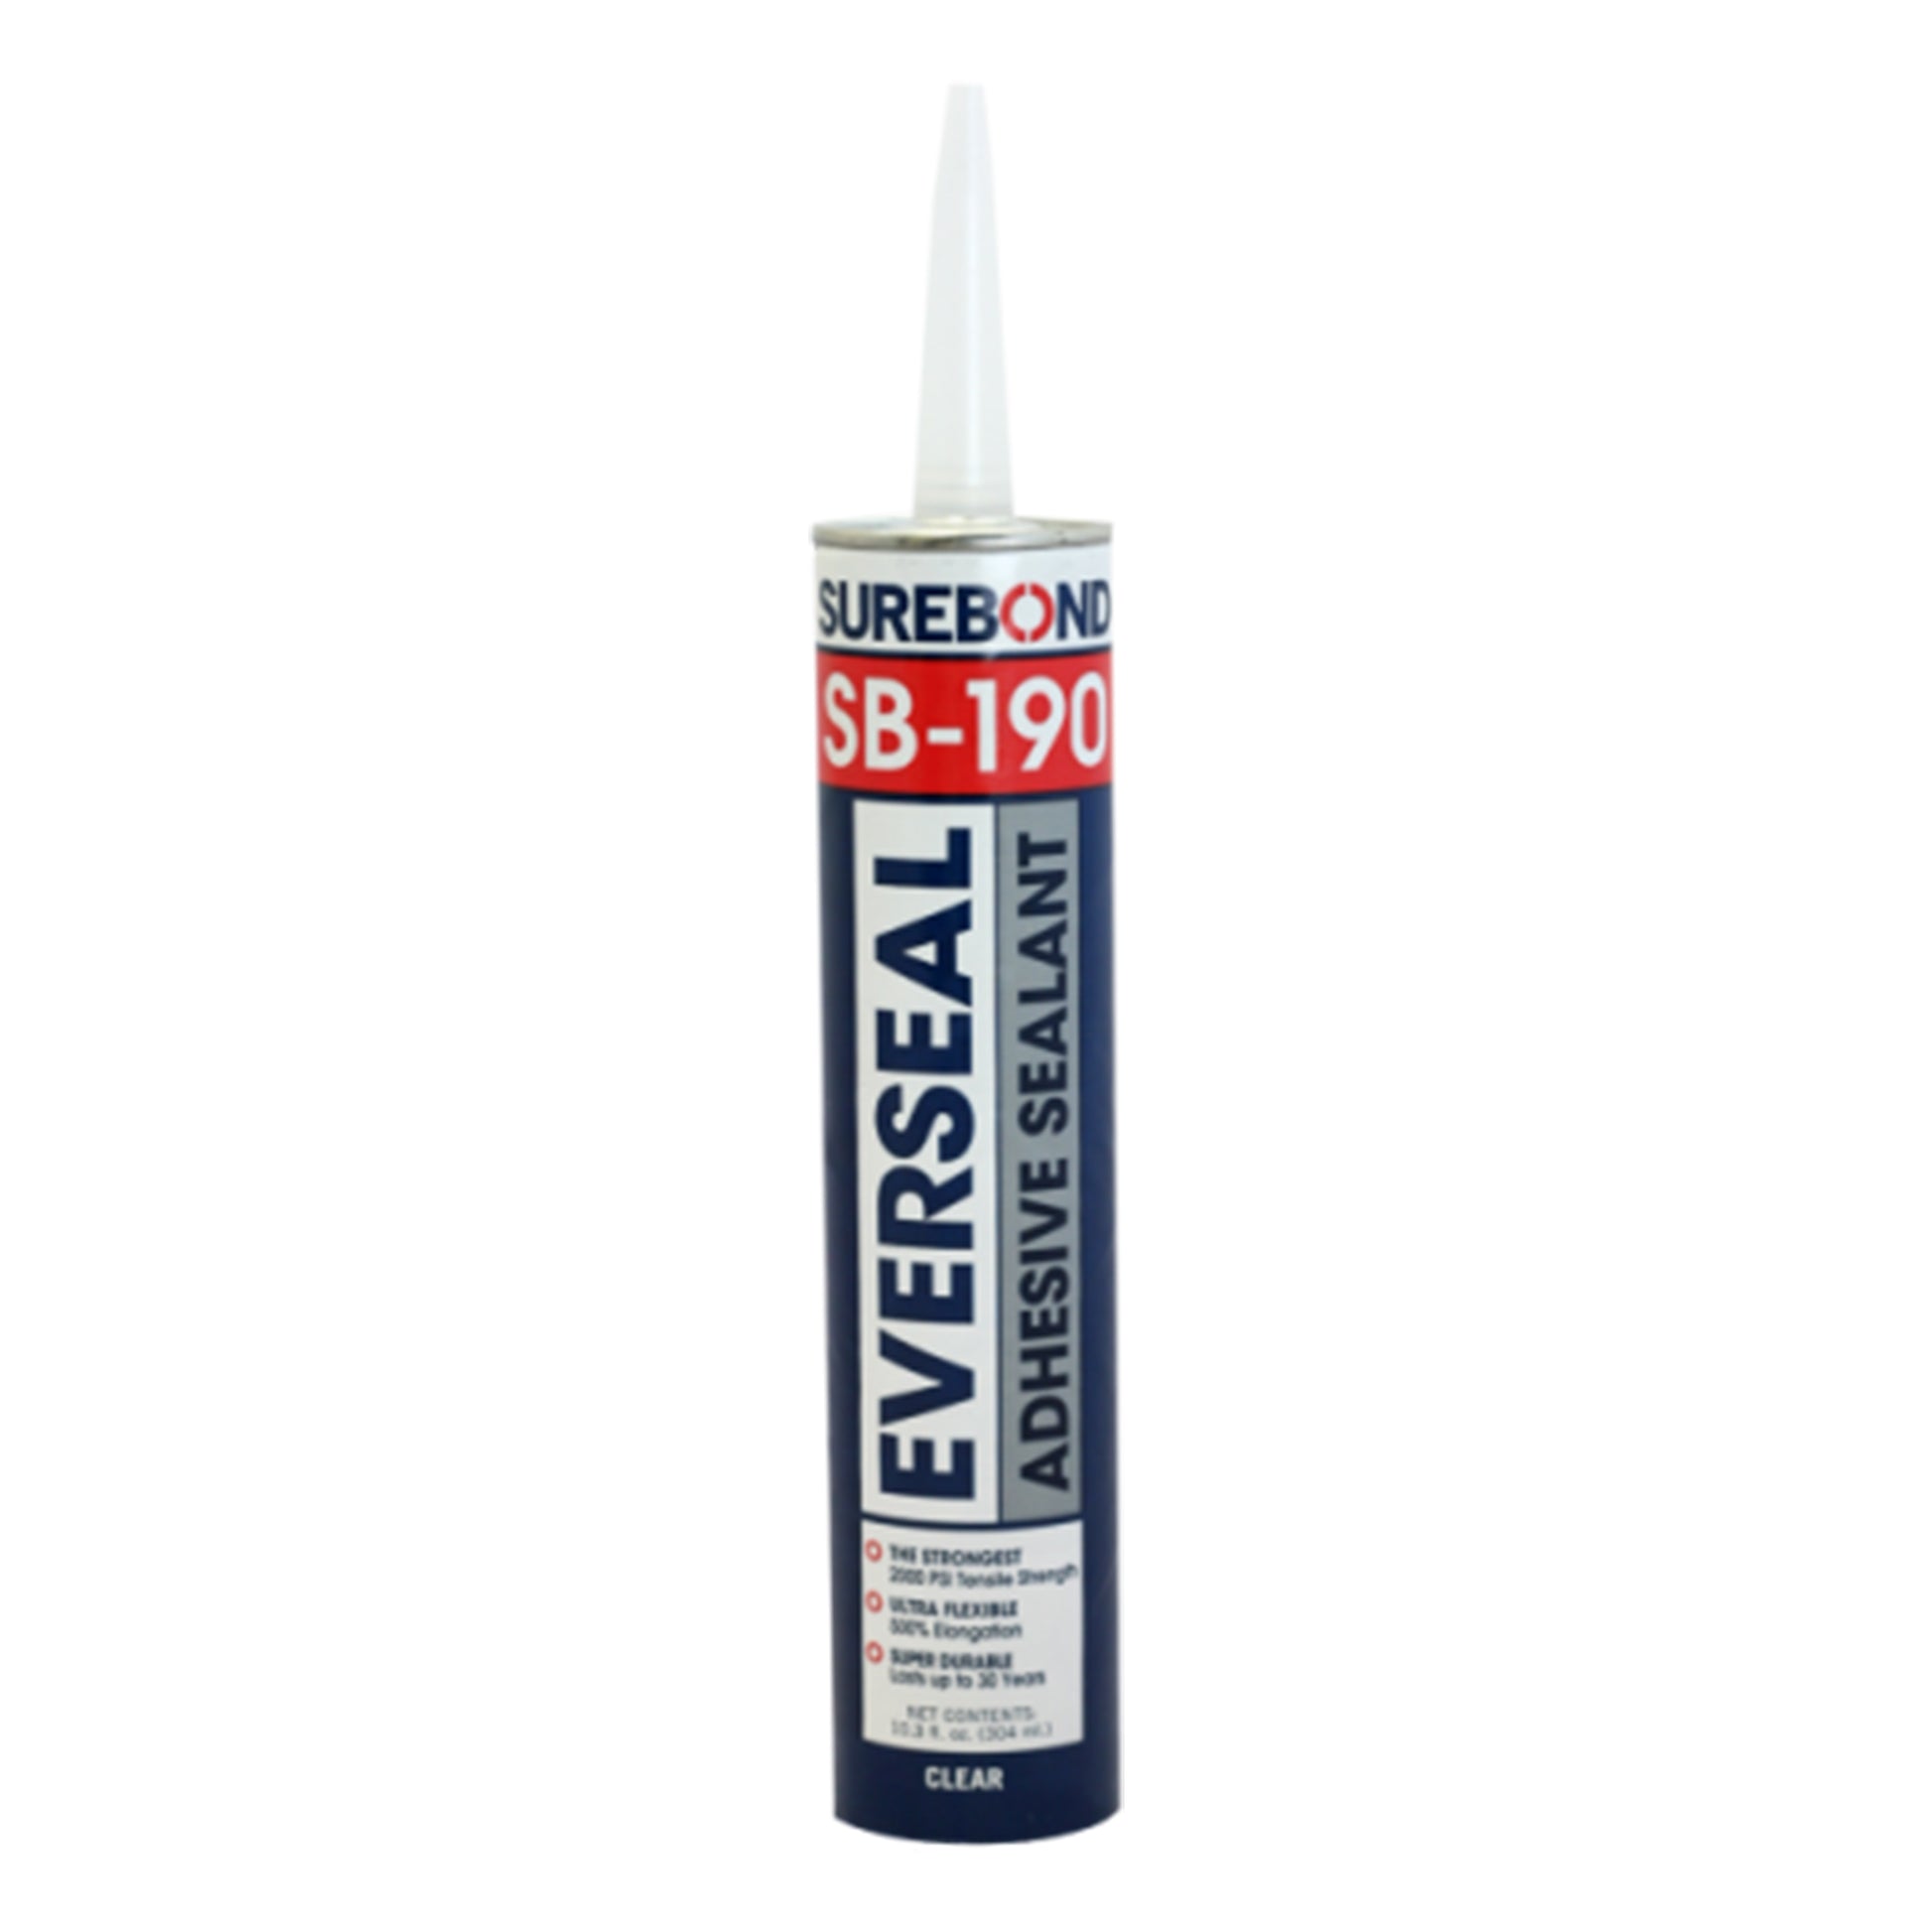 Surebond SB-190 EverSeal Adhesive Sealant